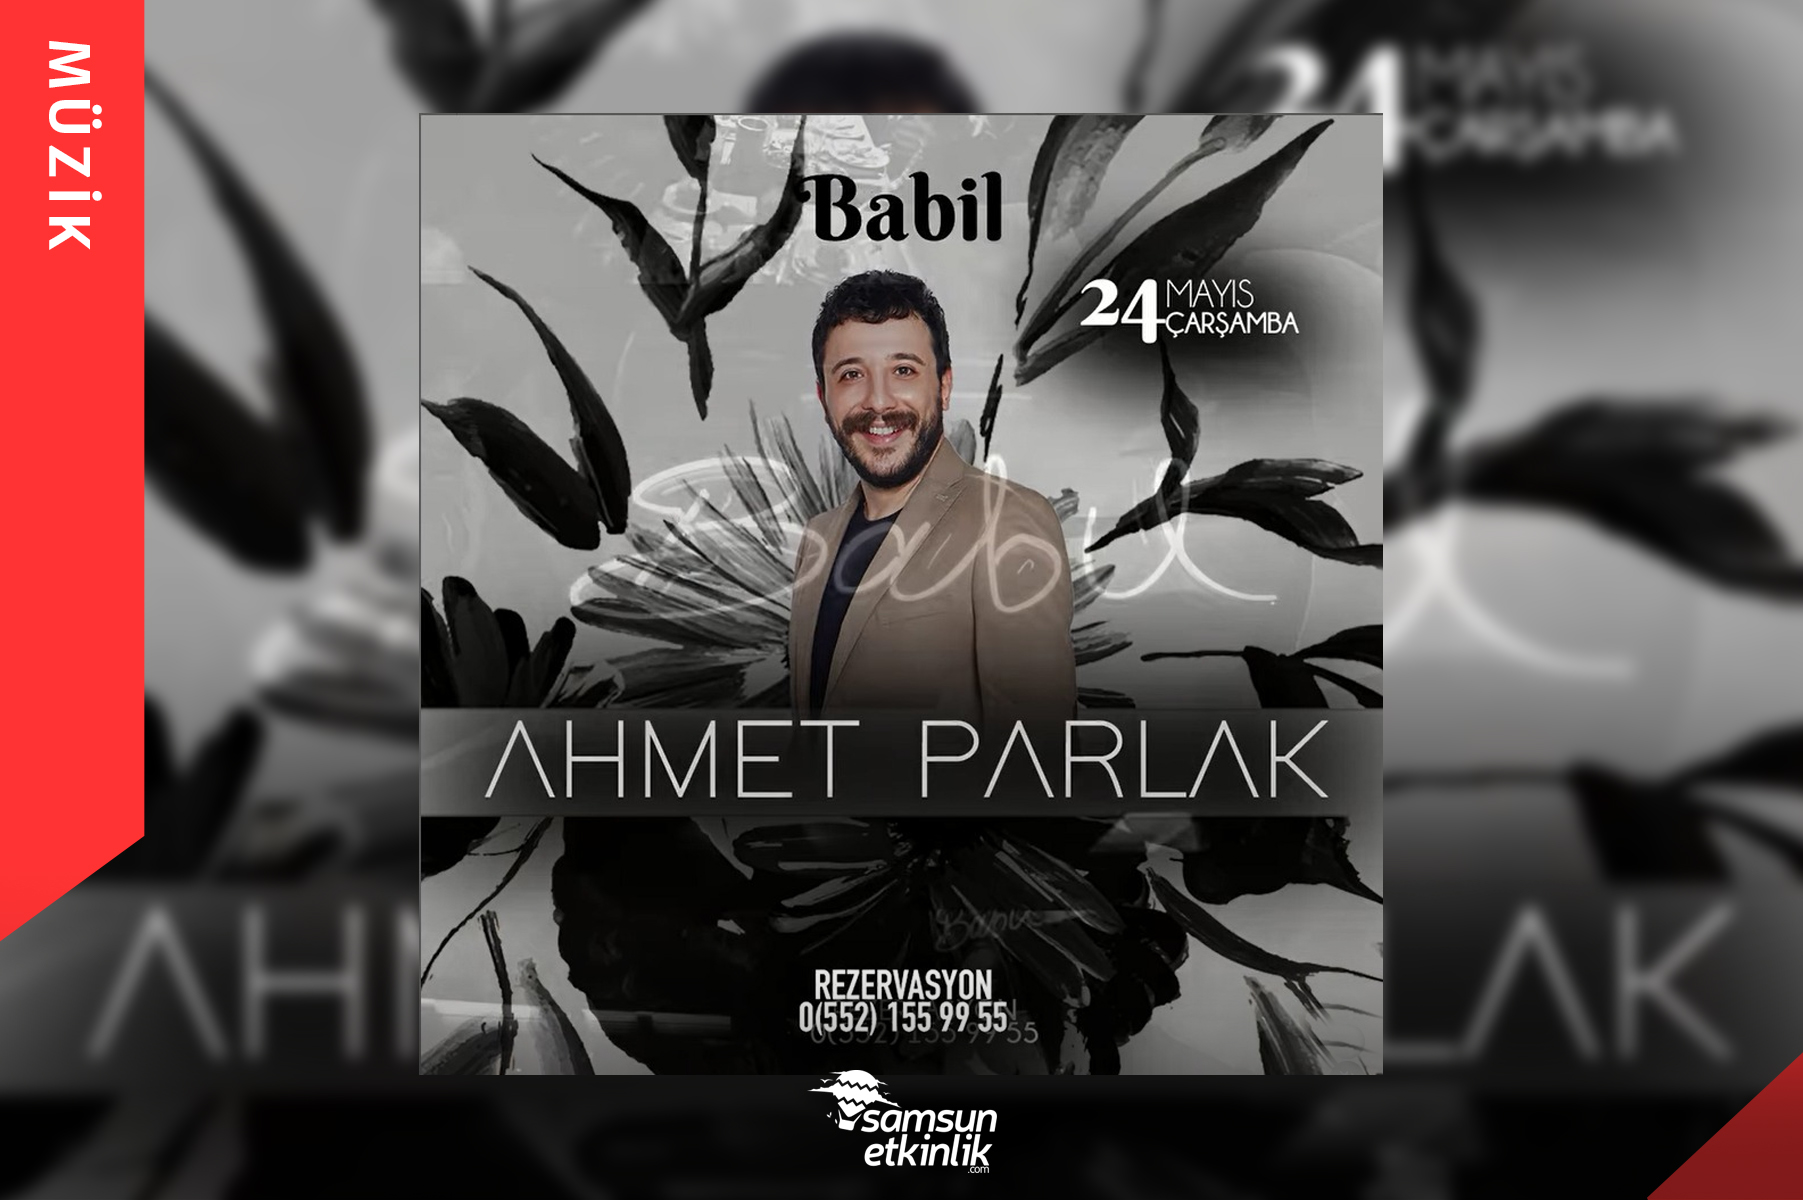 Ahmet Parlak Babil Sahnesi’nde